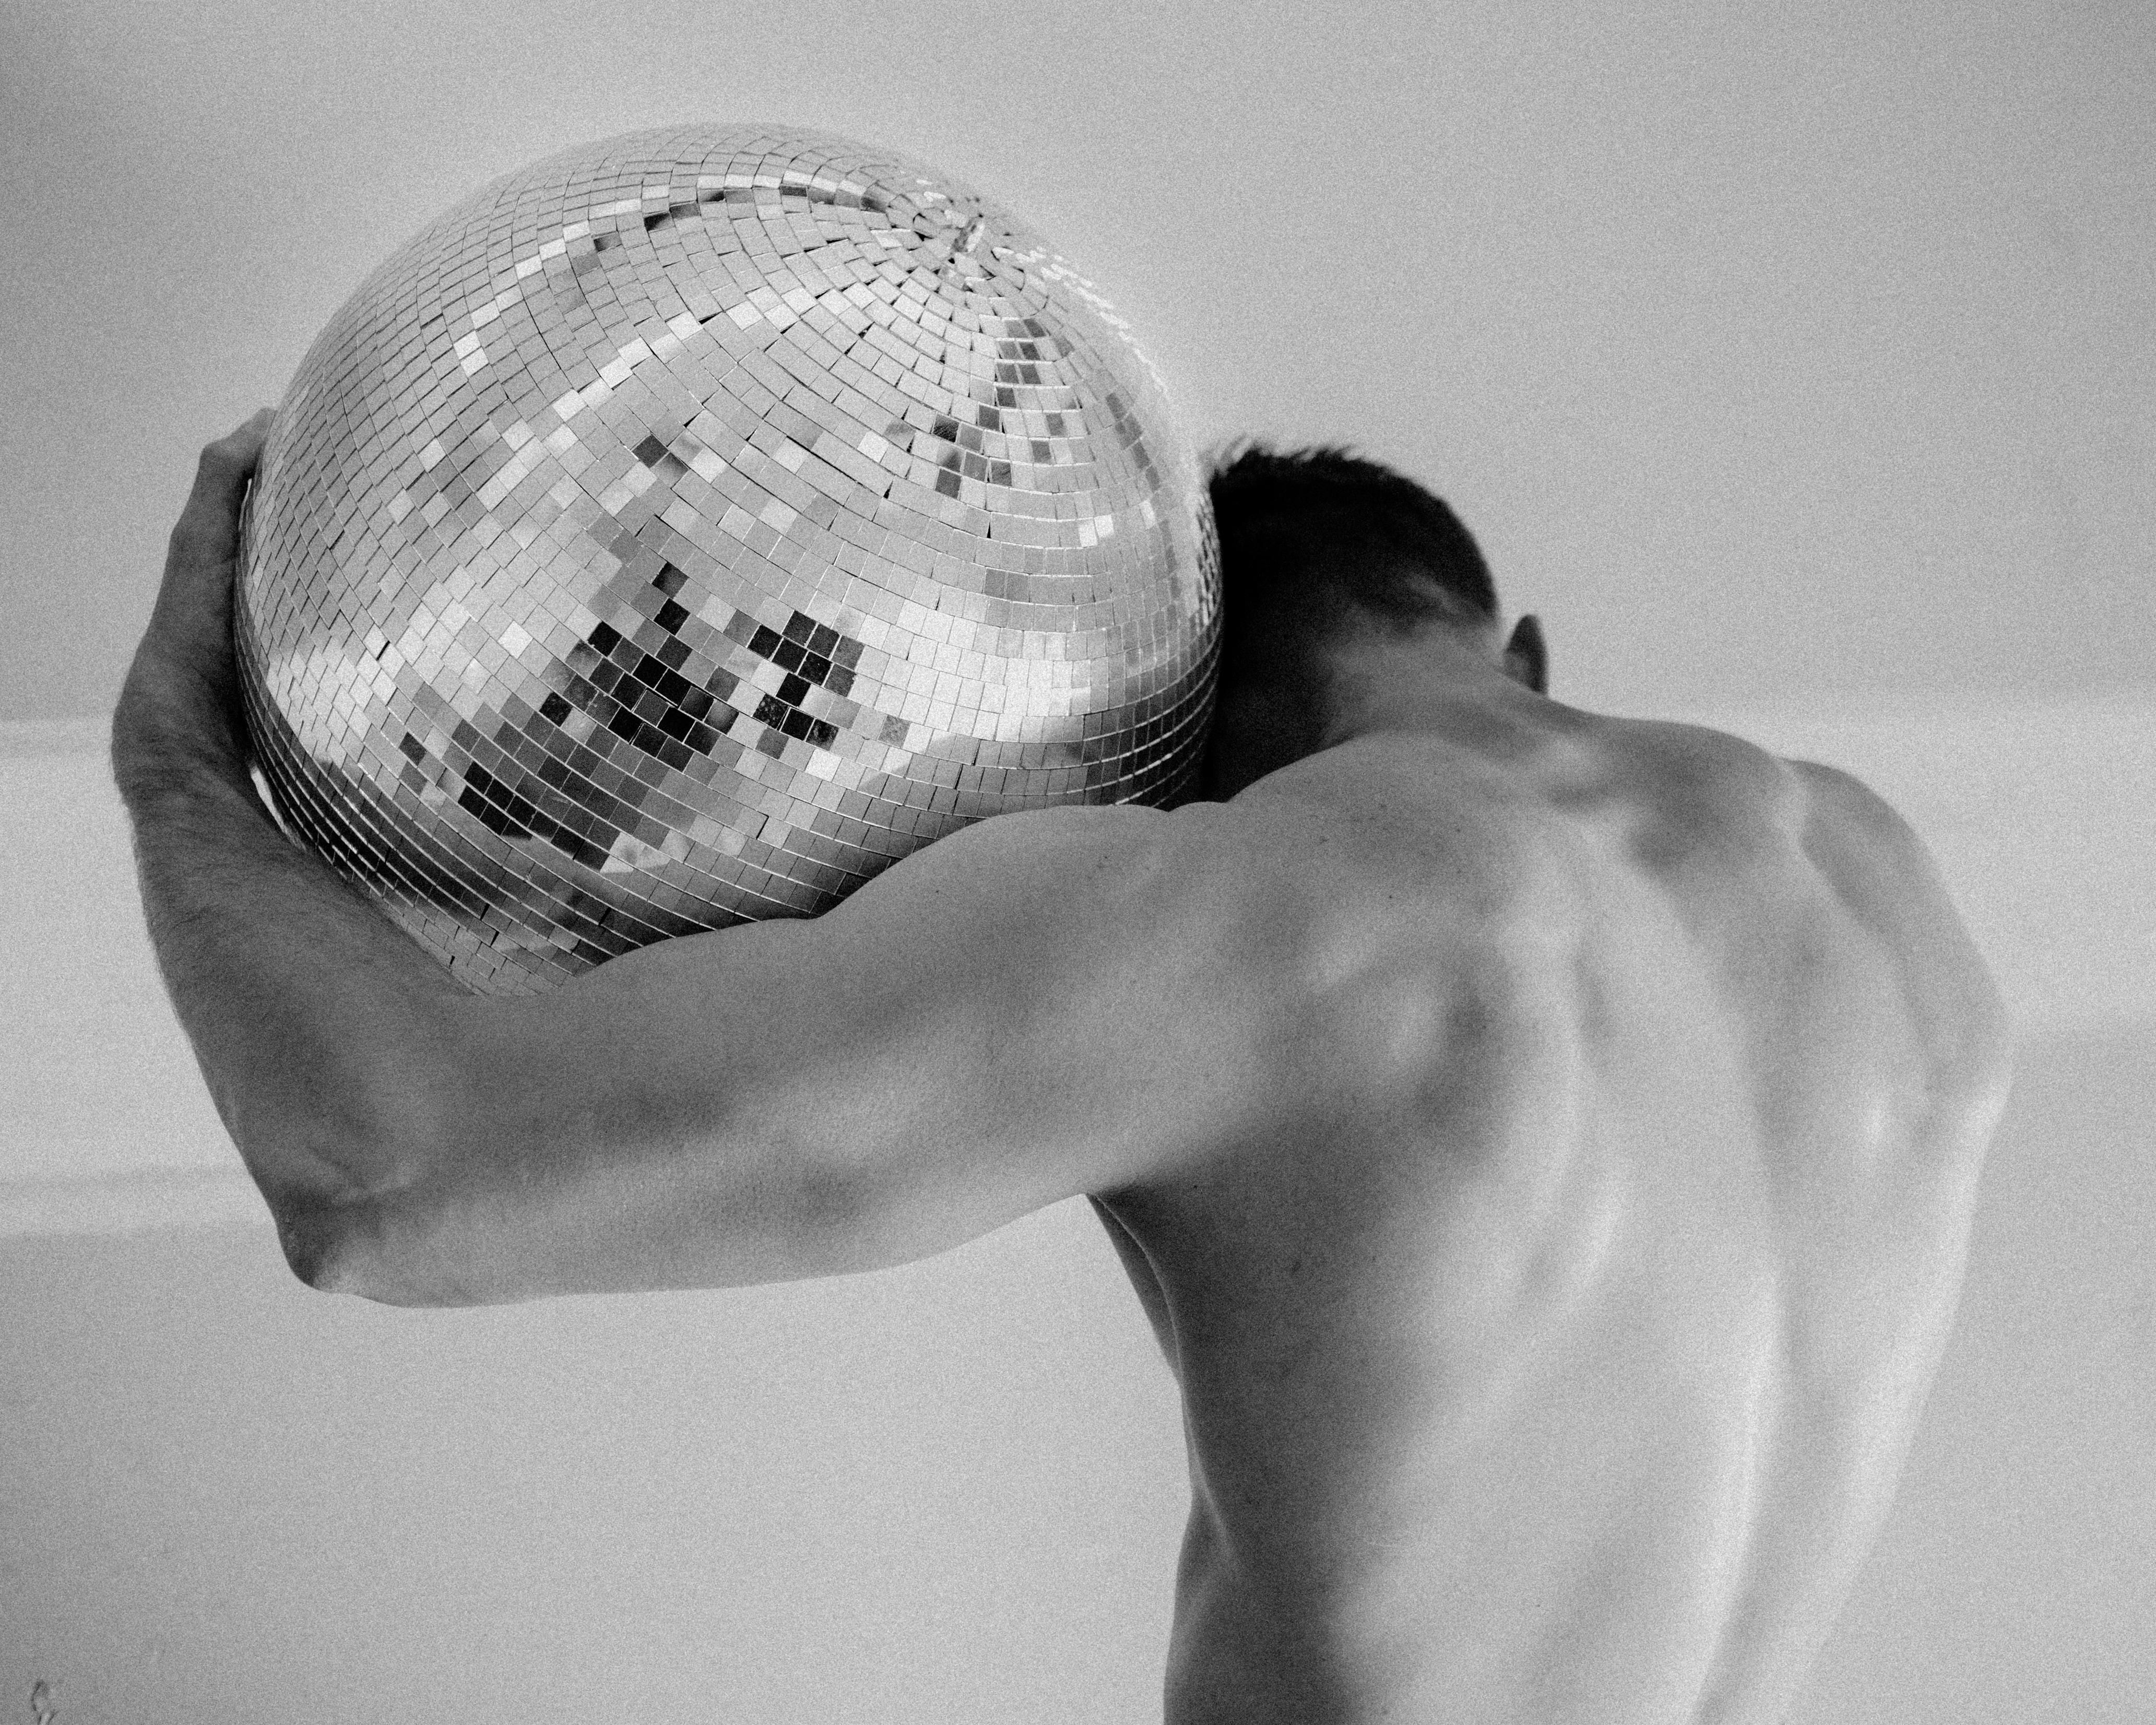 Figurative Photograph David Pugh - Disco Atlas (Disco Ball, Black & White, Atlas, Male Figure, Shiny, Gym, Workout)